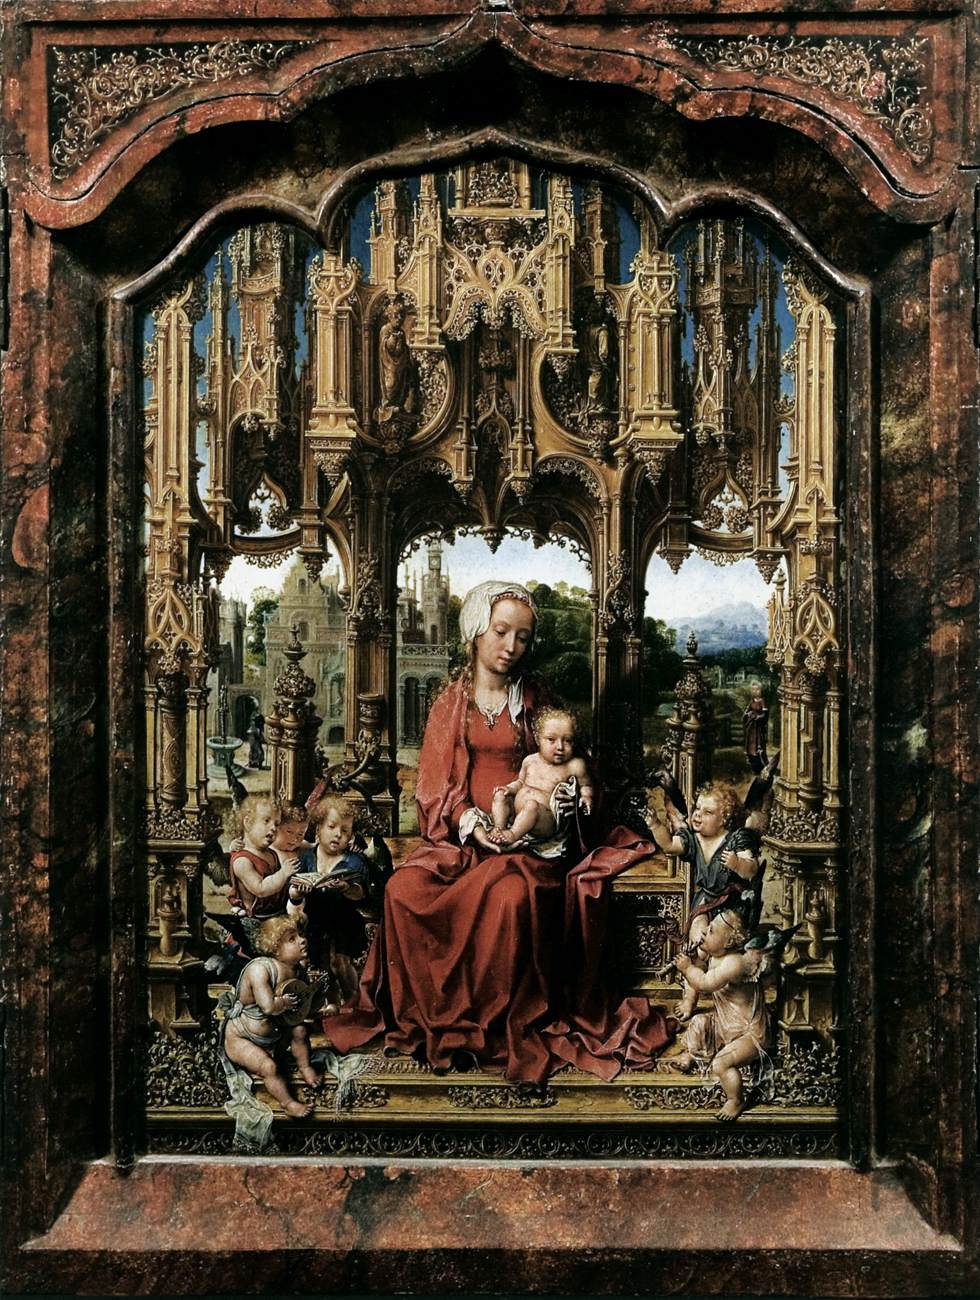 Malvagna Altarpiece (Central Panel)